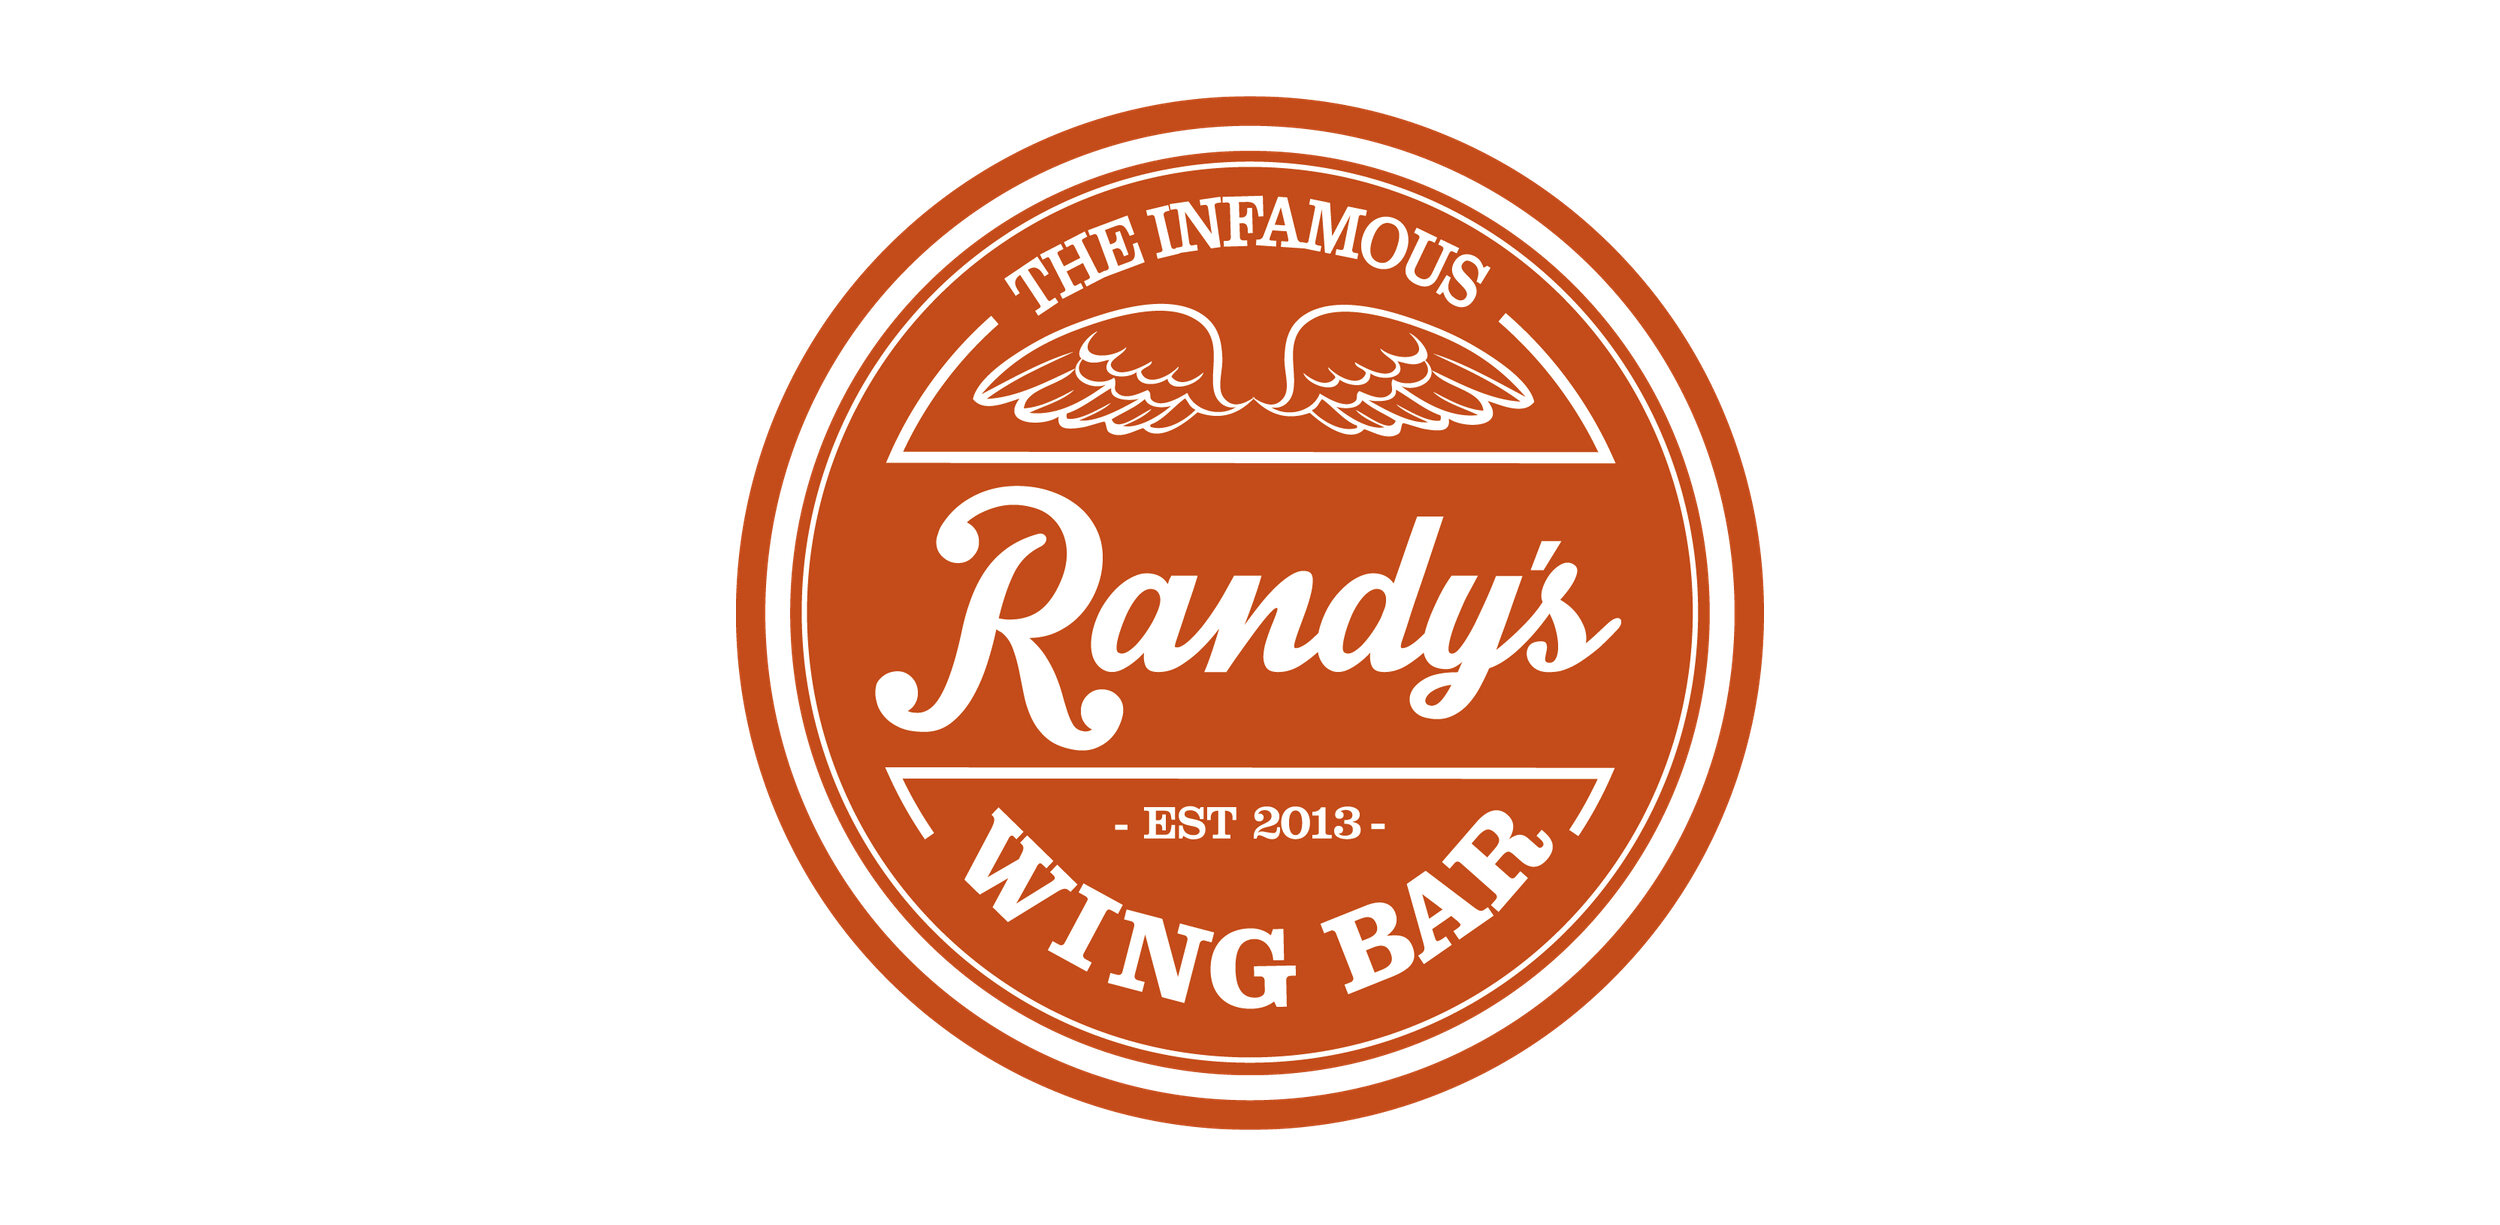 Randys Wing Bar London UK